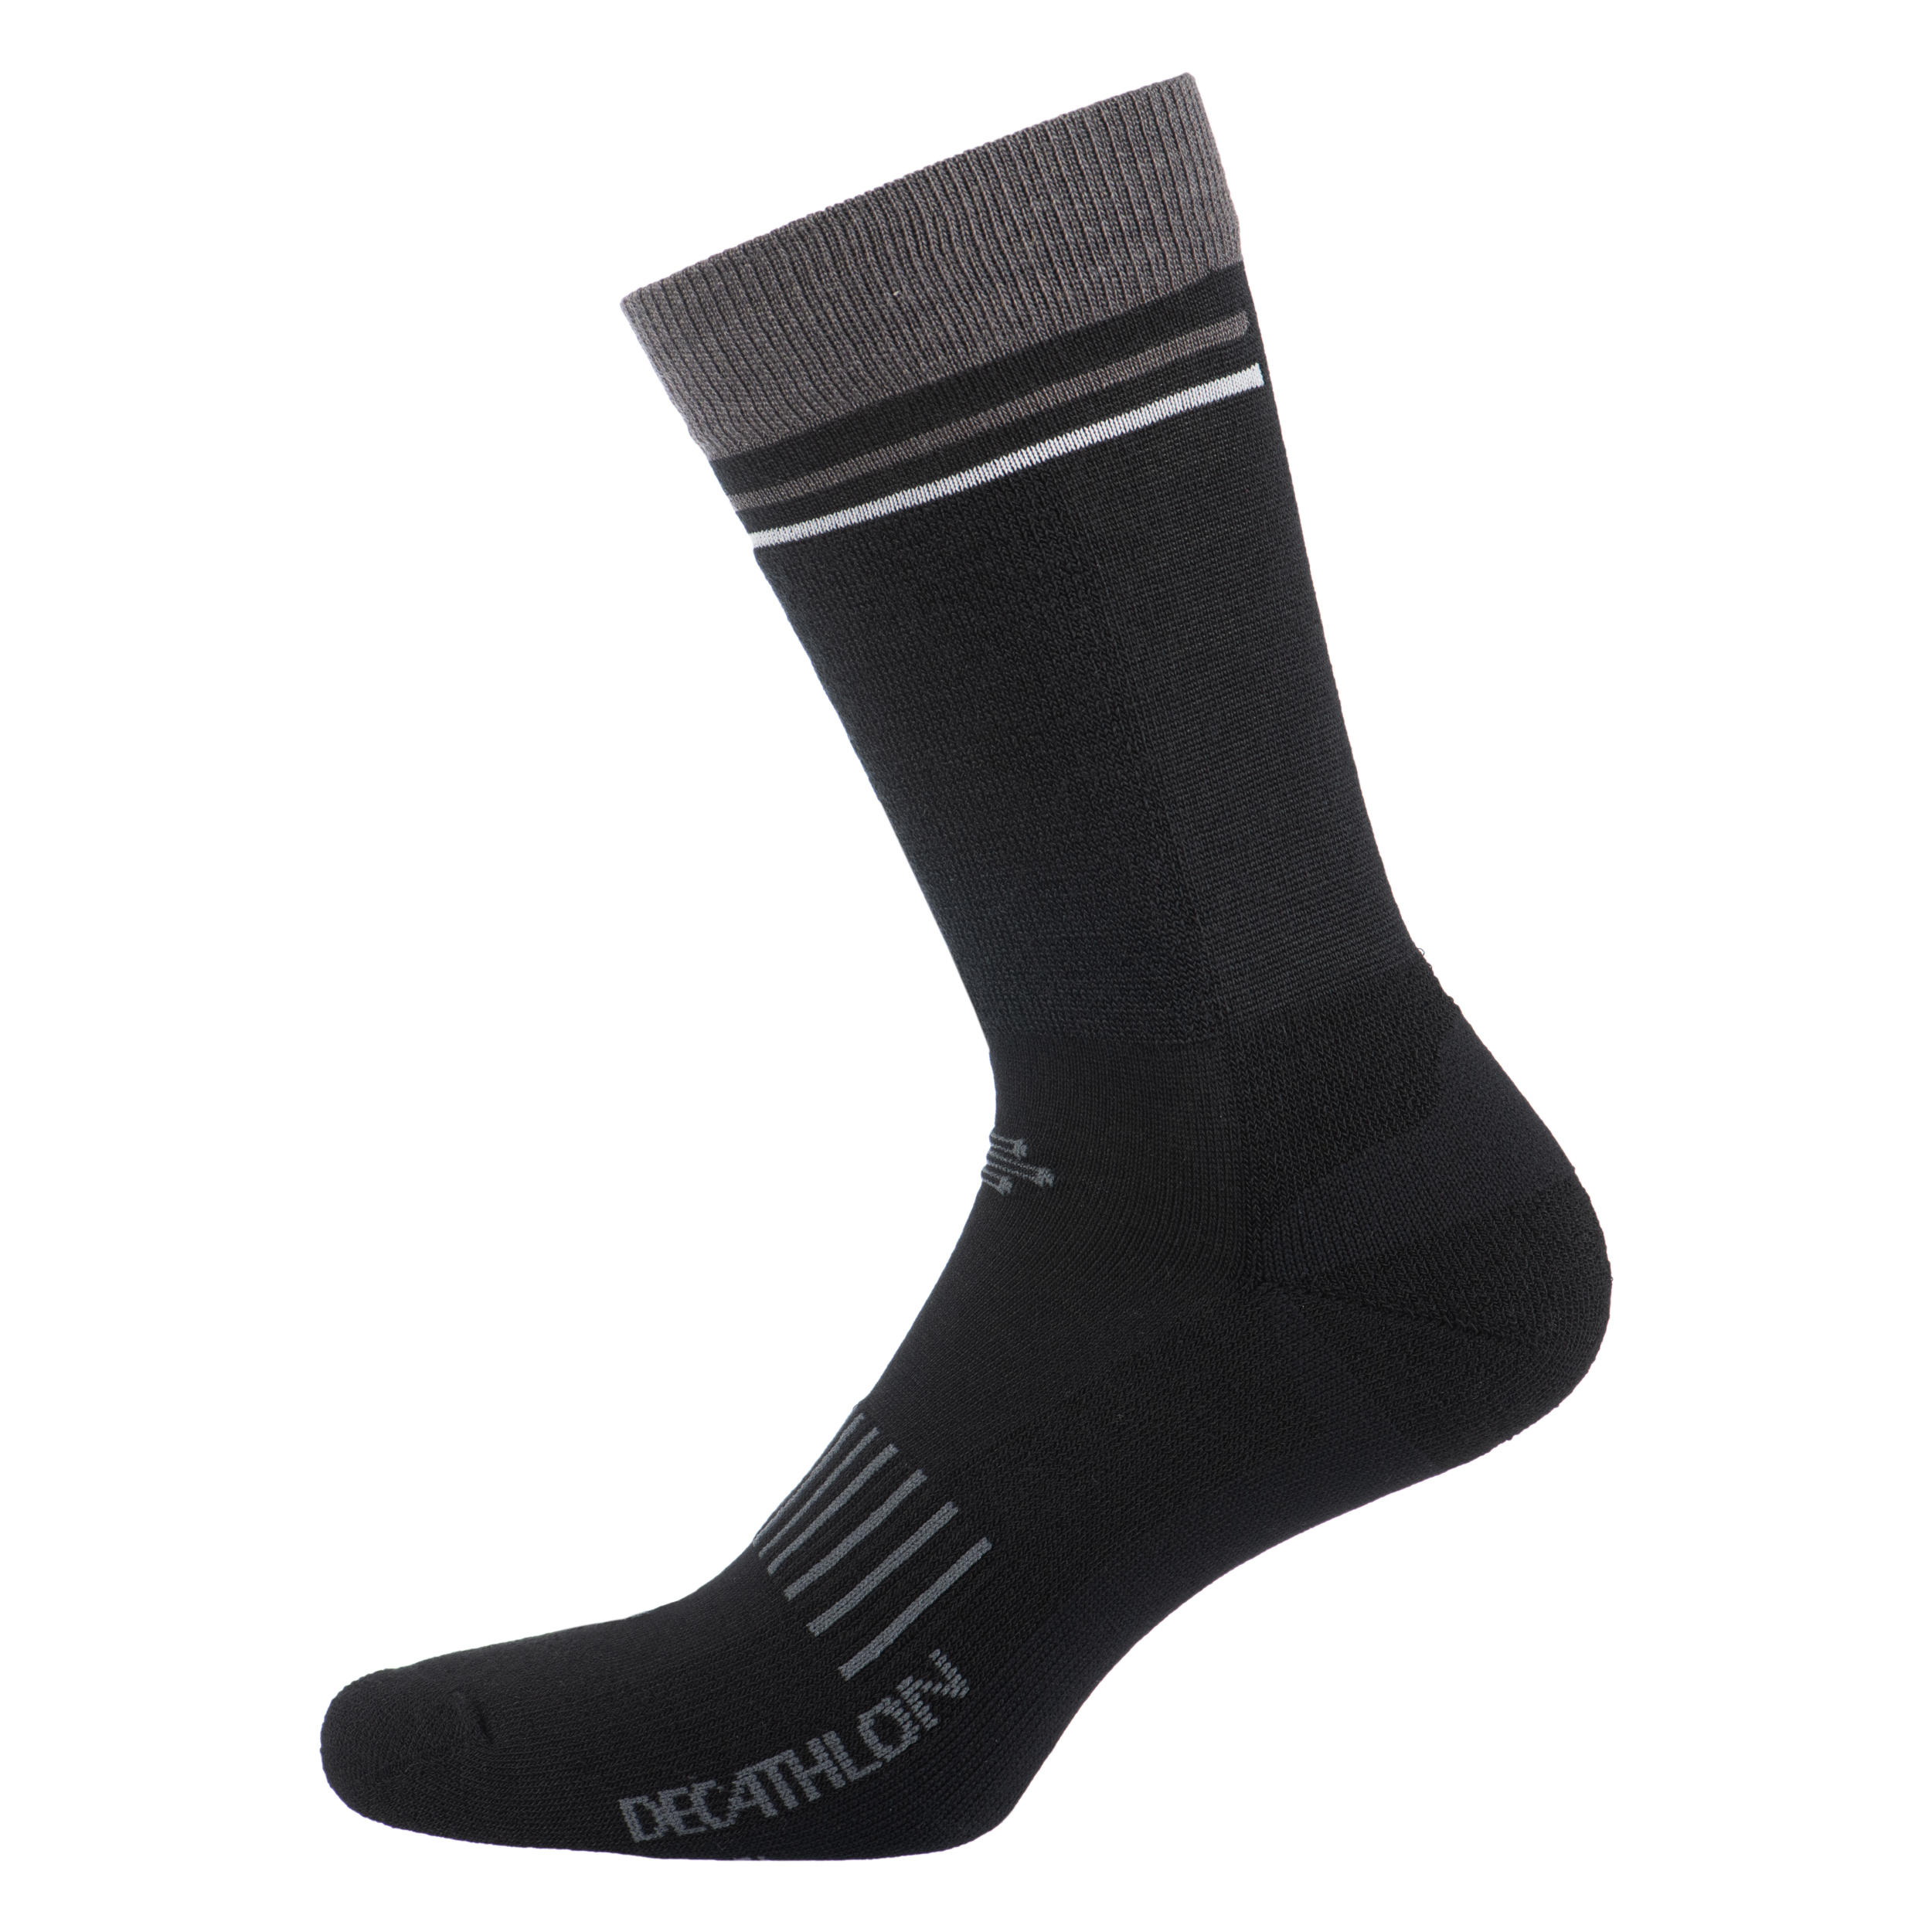 900 Winter Cycling Socks - Black/Grey 3/3